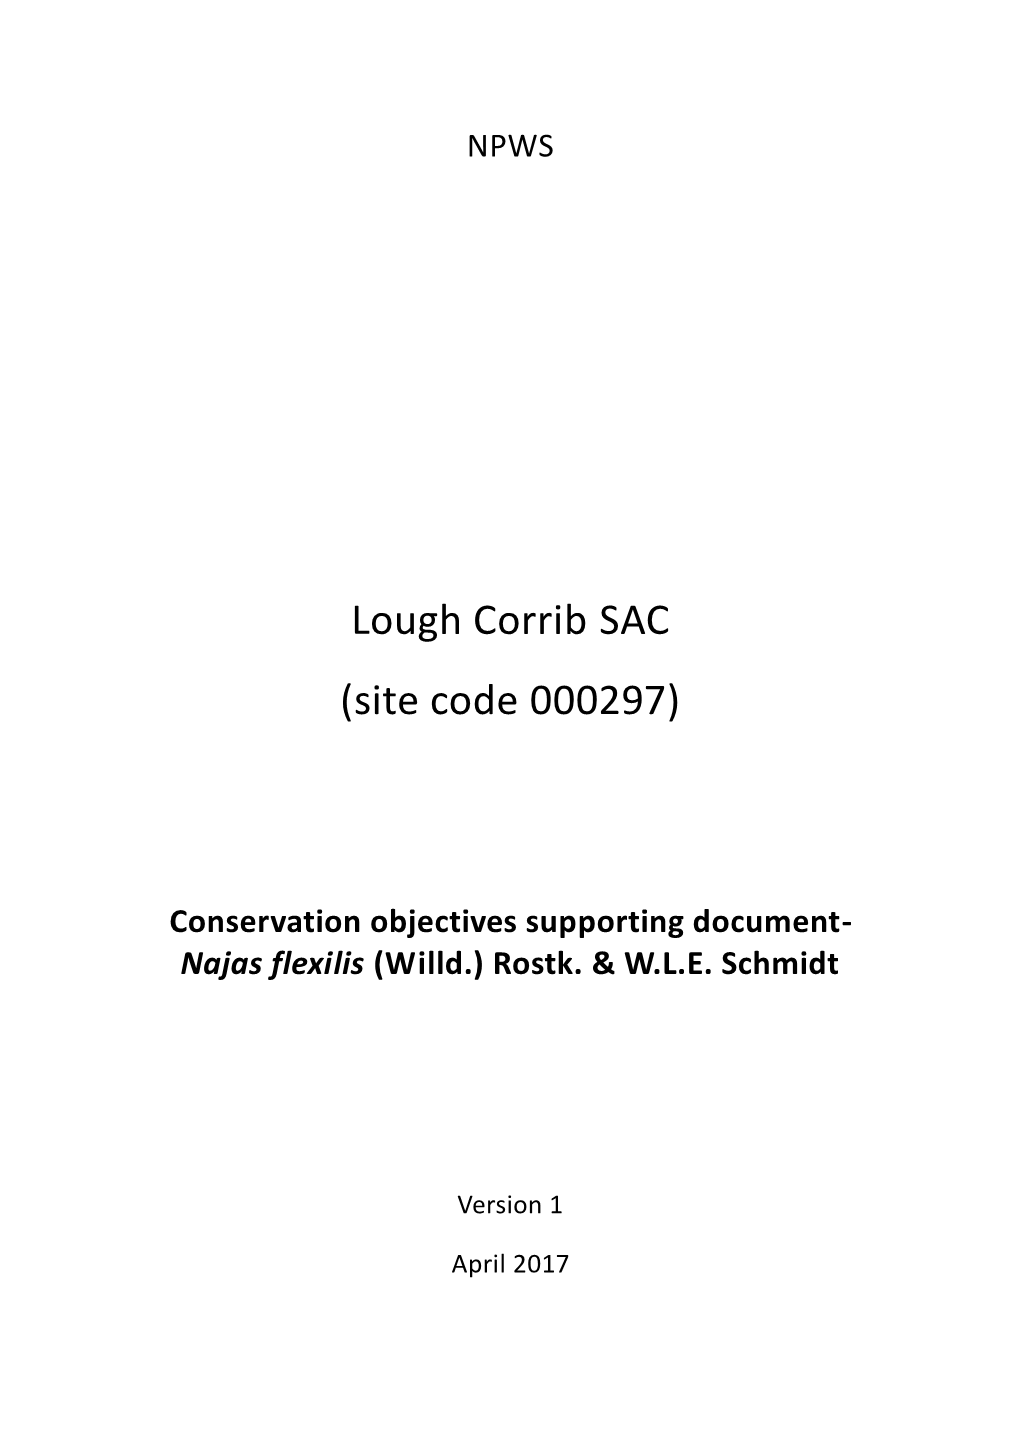 Lough Corrib SAC (Site Code 000297)